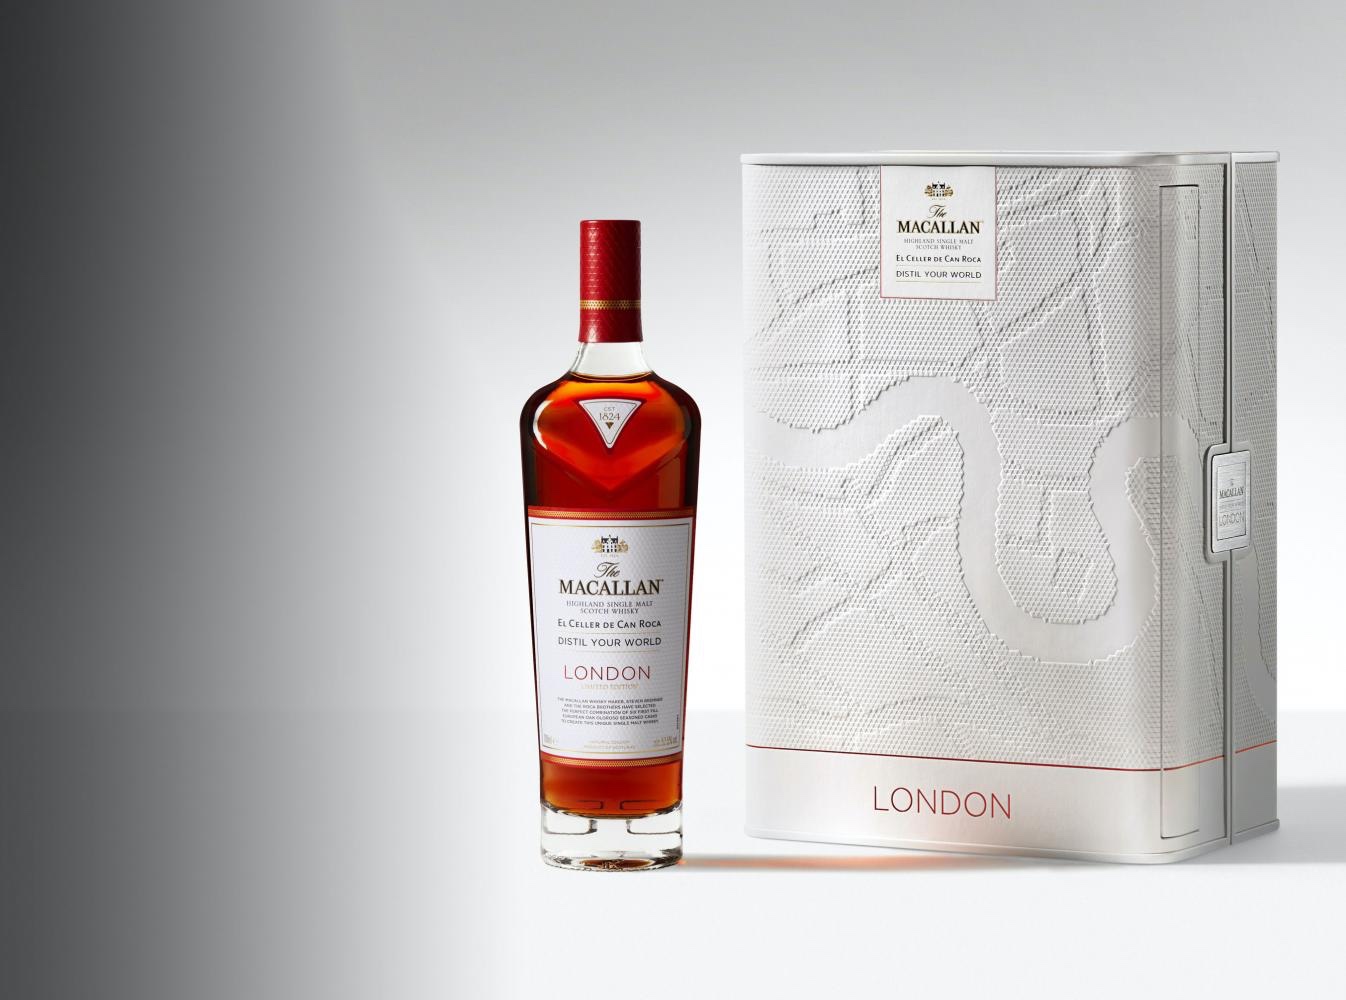 Macallan Distill Your World: London Edition